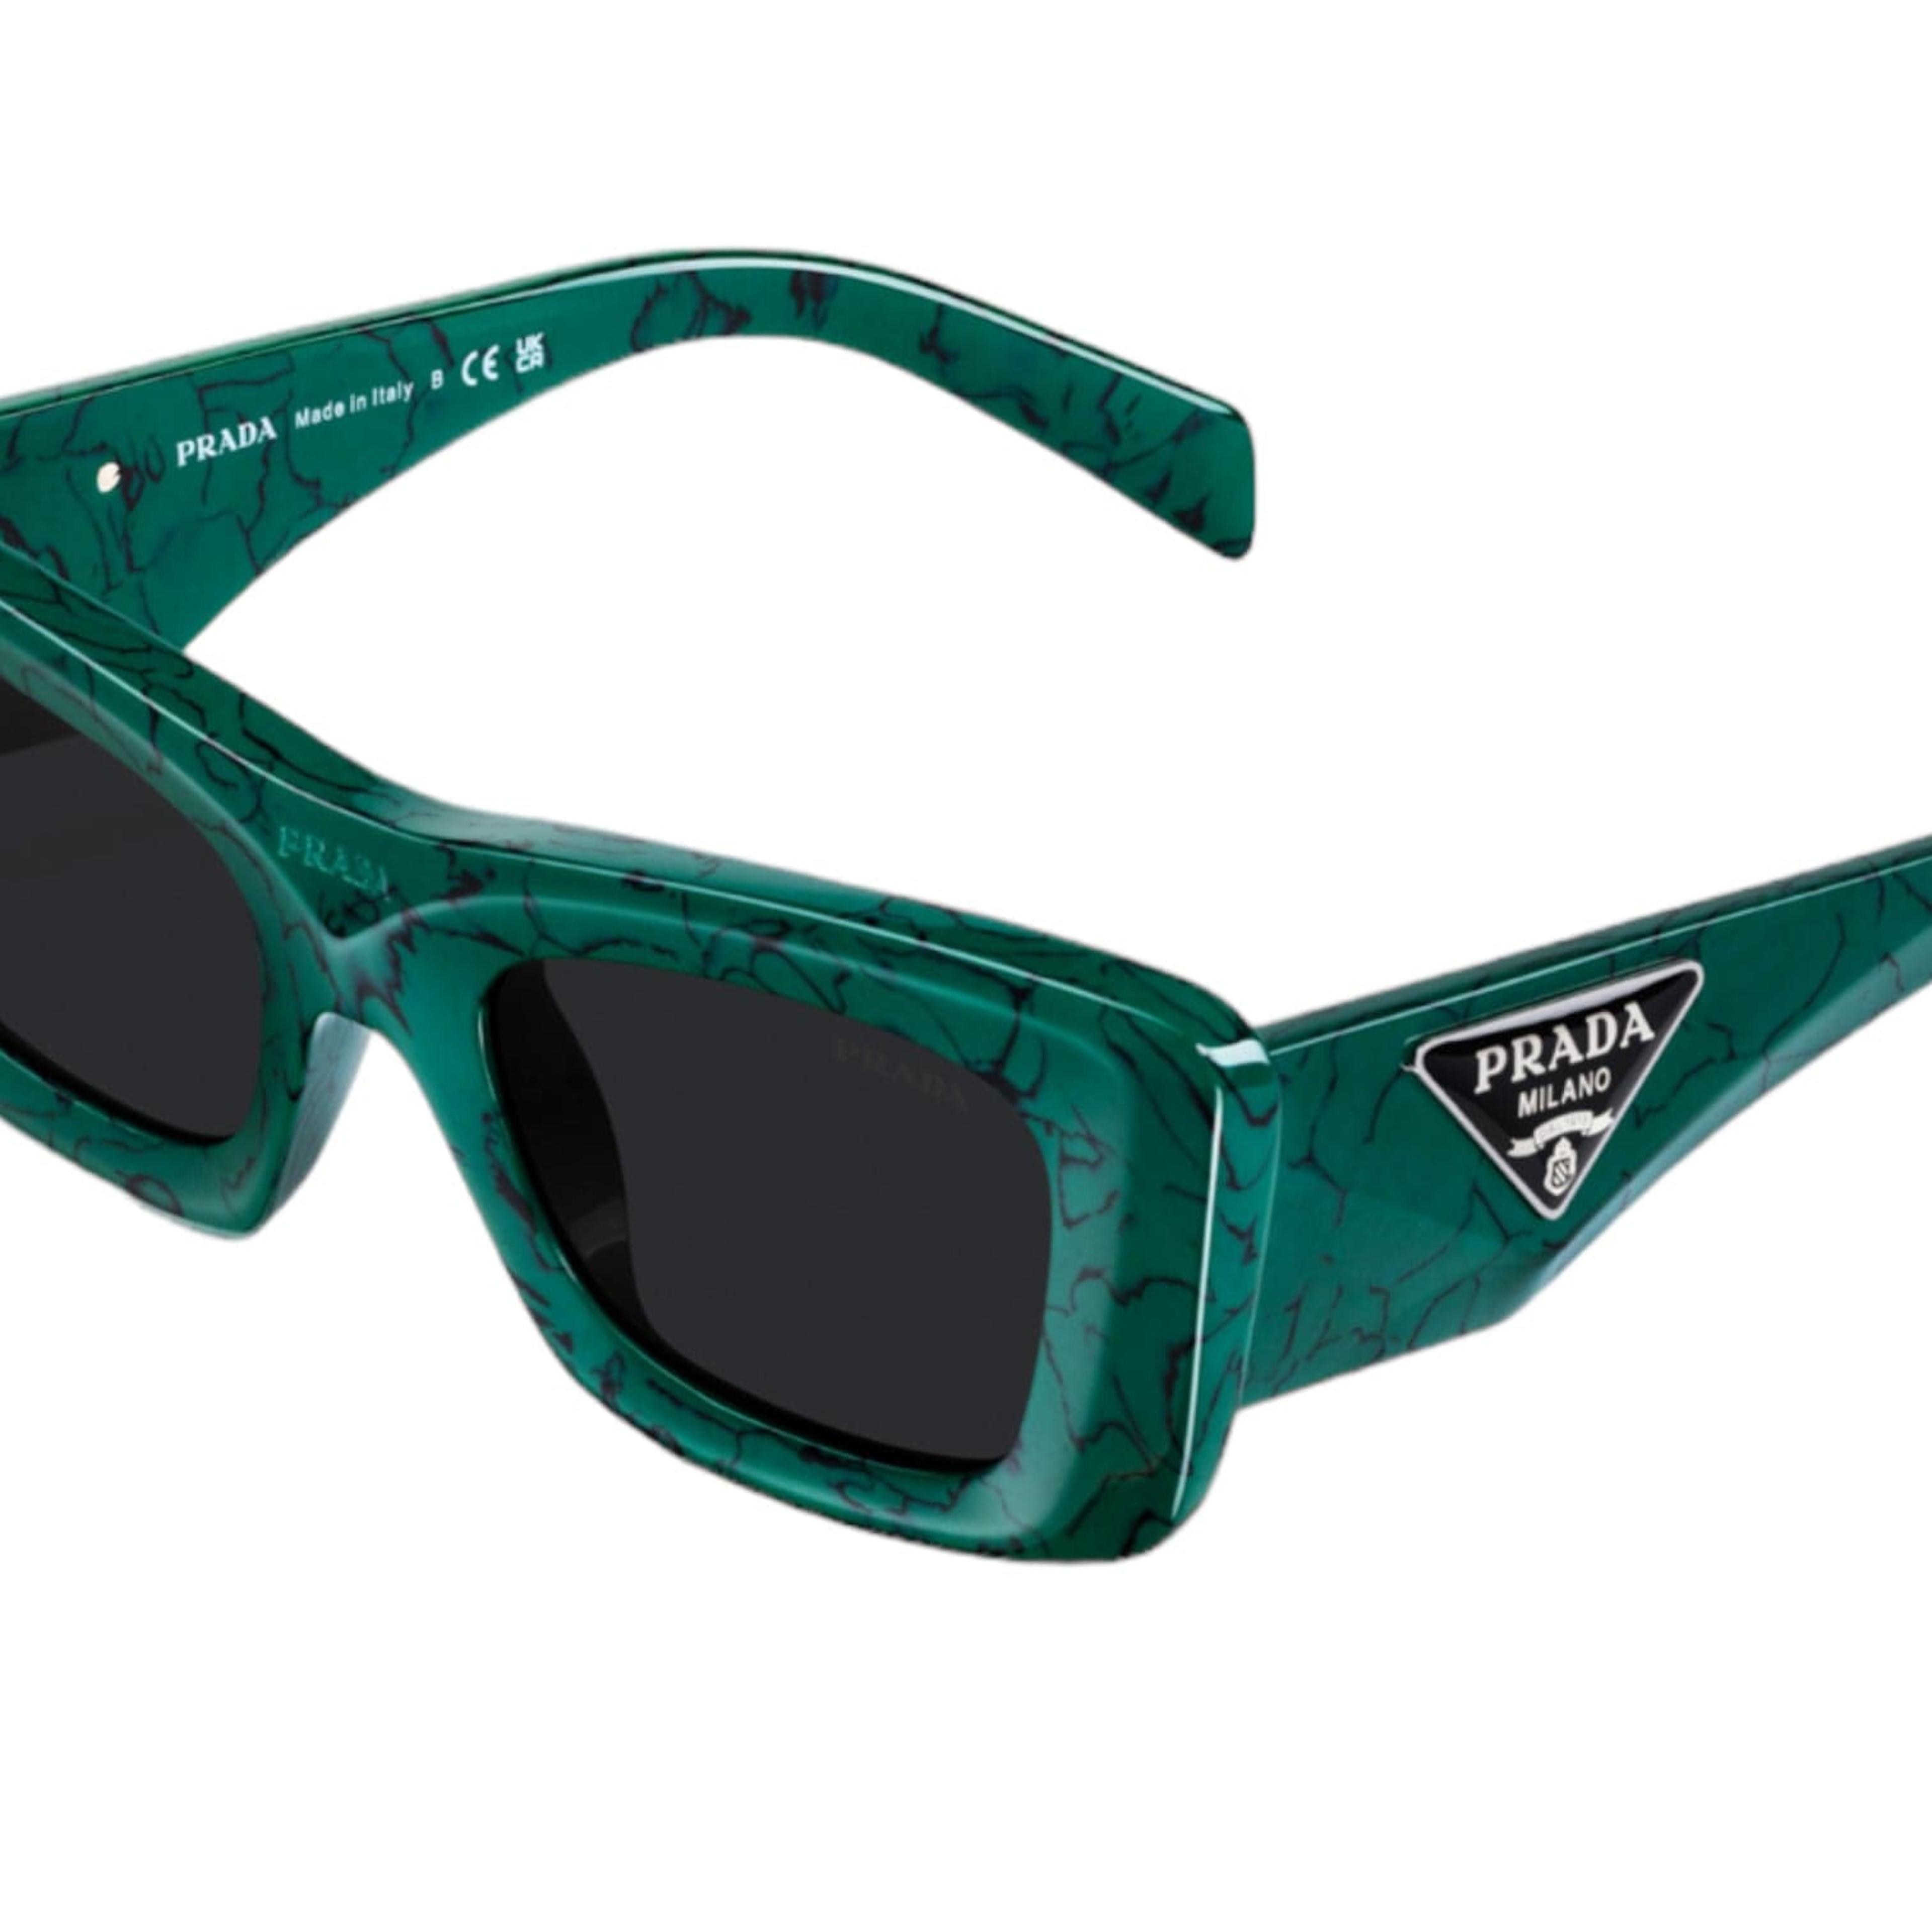 Alternate View 3 of Prada Symbole Glasses Marbleized Green